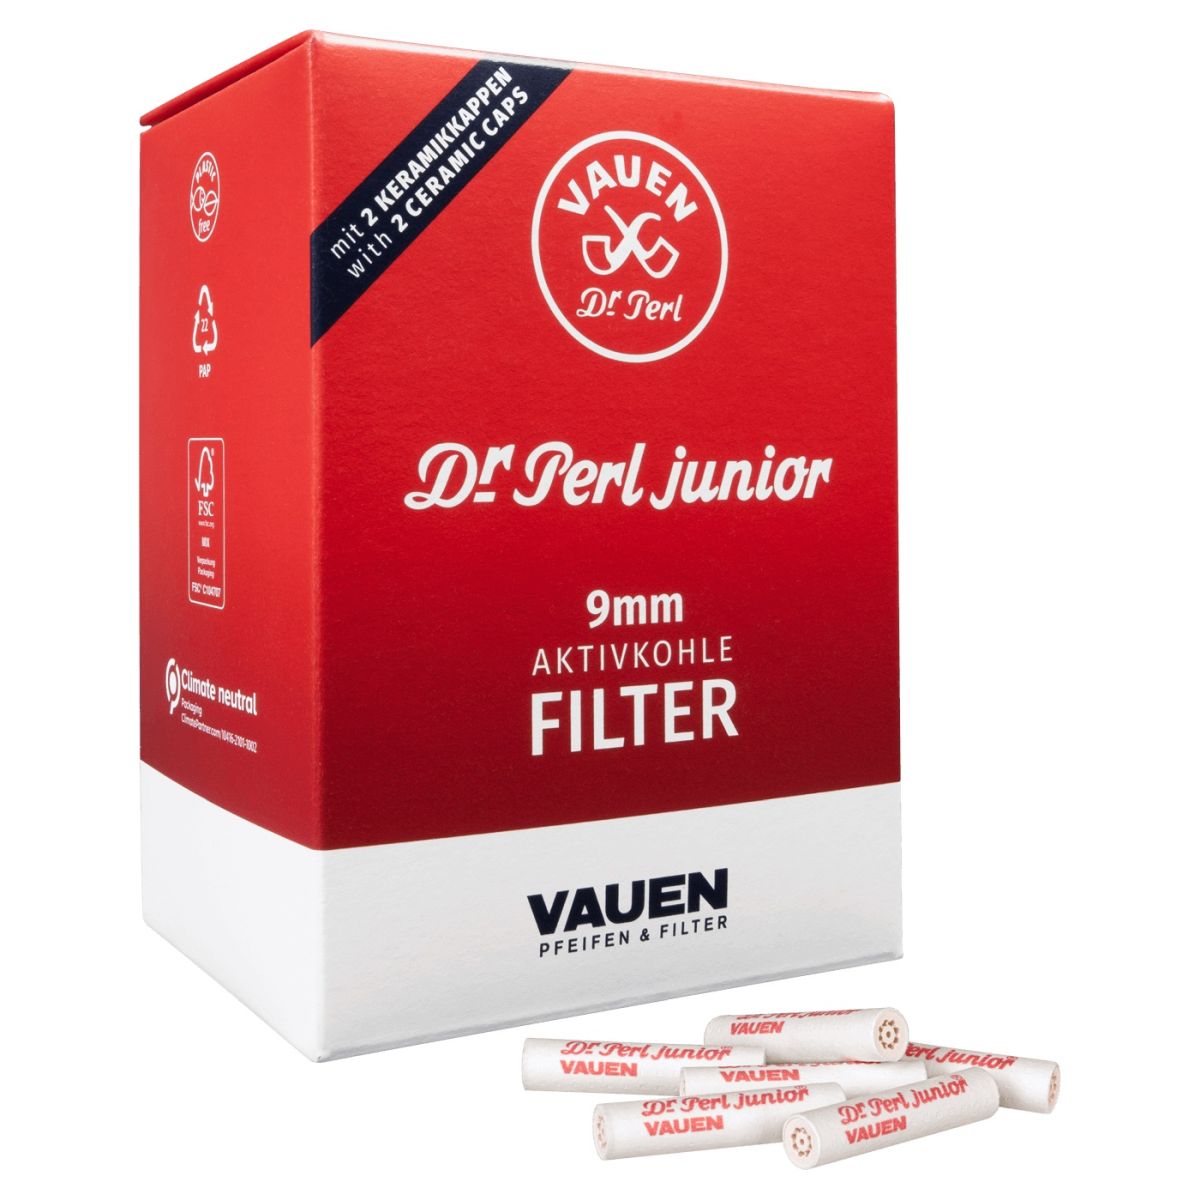 Dr. Perl Dr. Perl Junior Jumax Activekohle Pfeifenfilter 9mm bei www.Tabakring.de kaufen